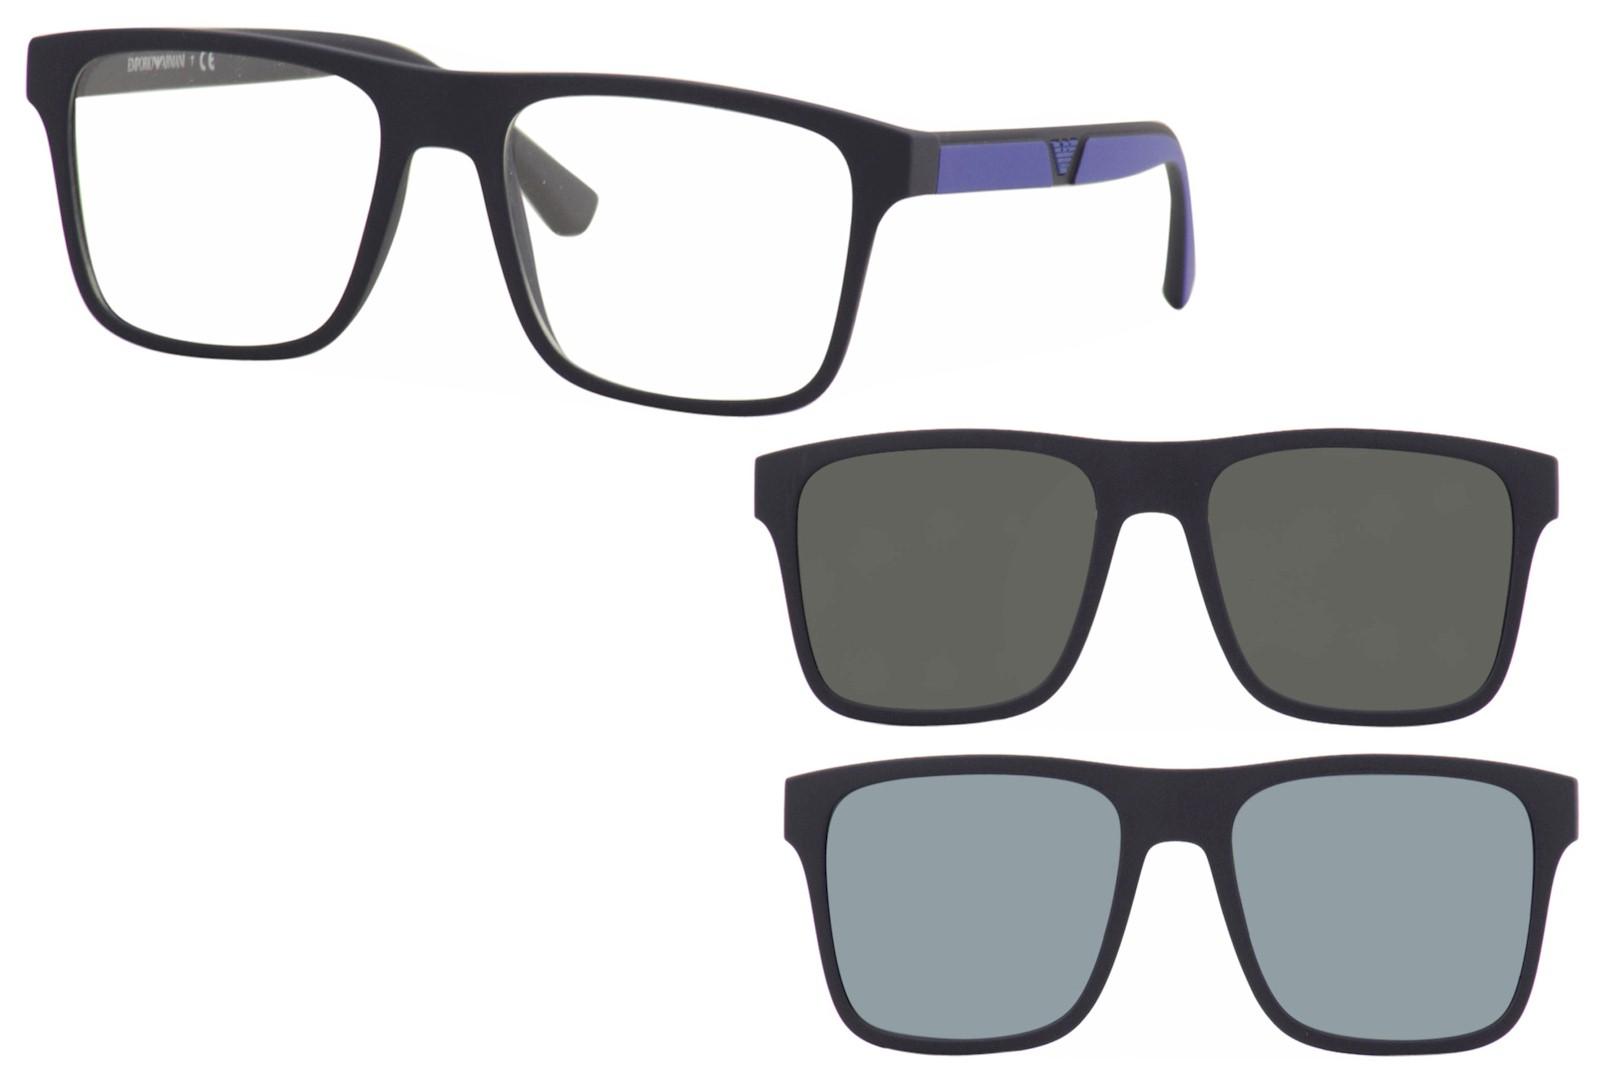 Emporio Armani Sunglasses EA4115 5801/1W Matte Black w/ two Clip-ons  54-18-145m | EyeSpecs.com